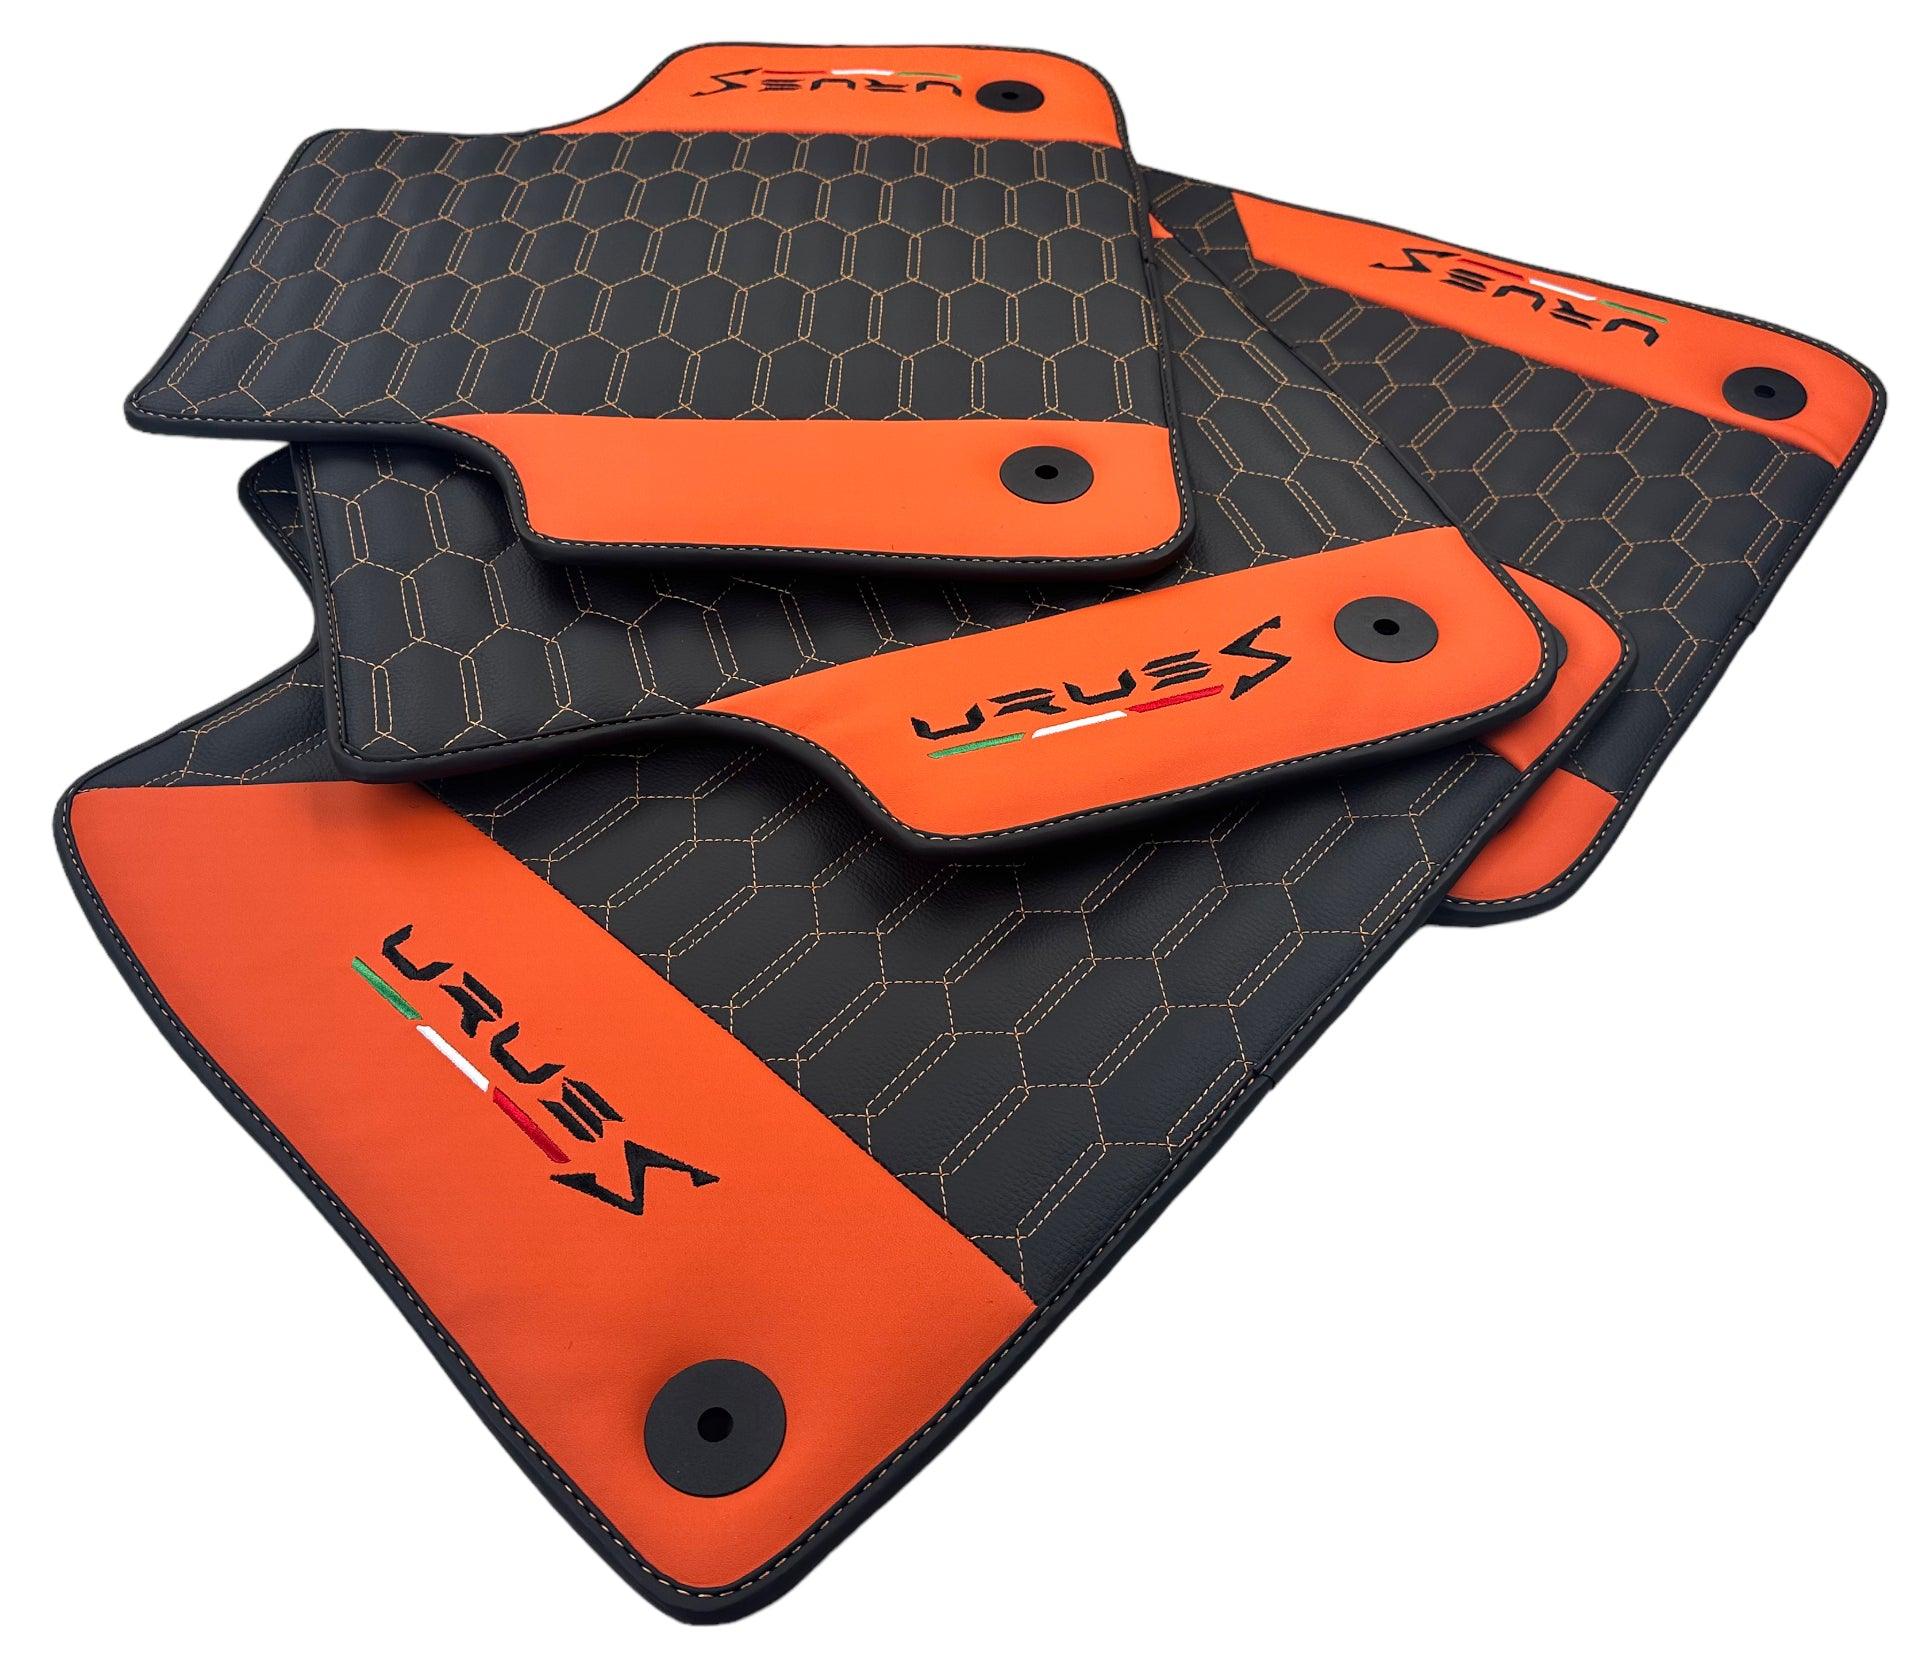 Black Leather Floor Mats For Lamborghini Urus S With Orange Nappa Leather